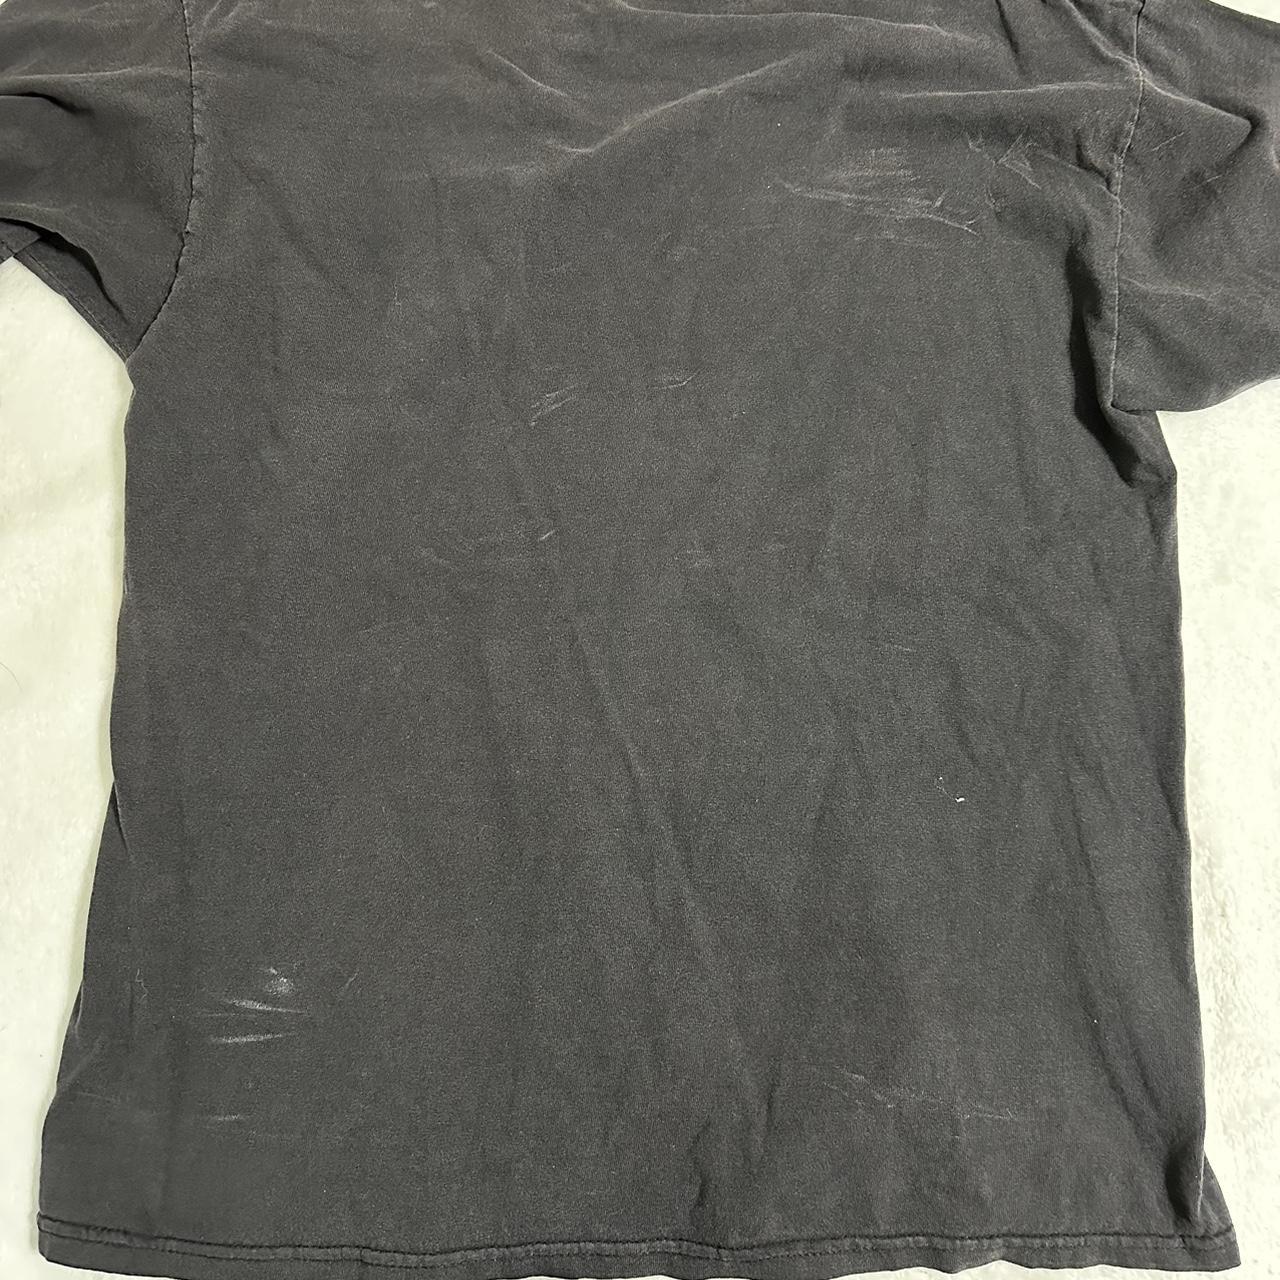 Women’s black large vintage t-shirt #retro #tshirt... - Depop